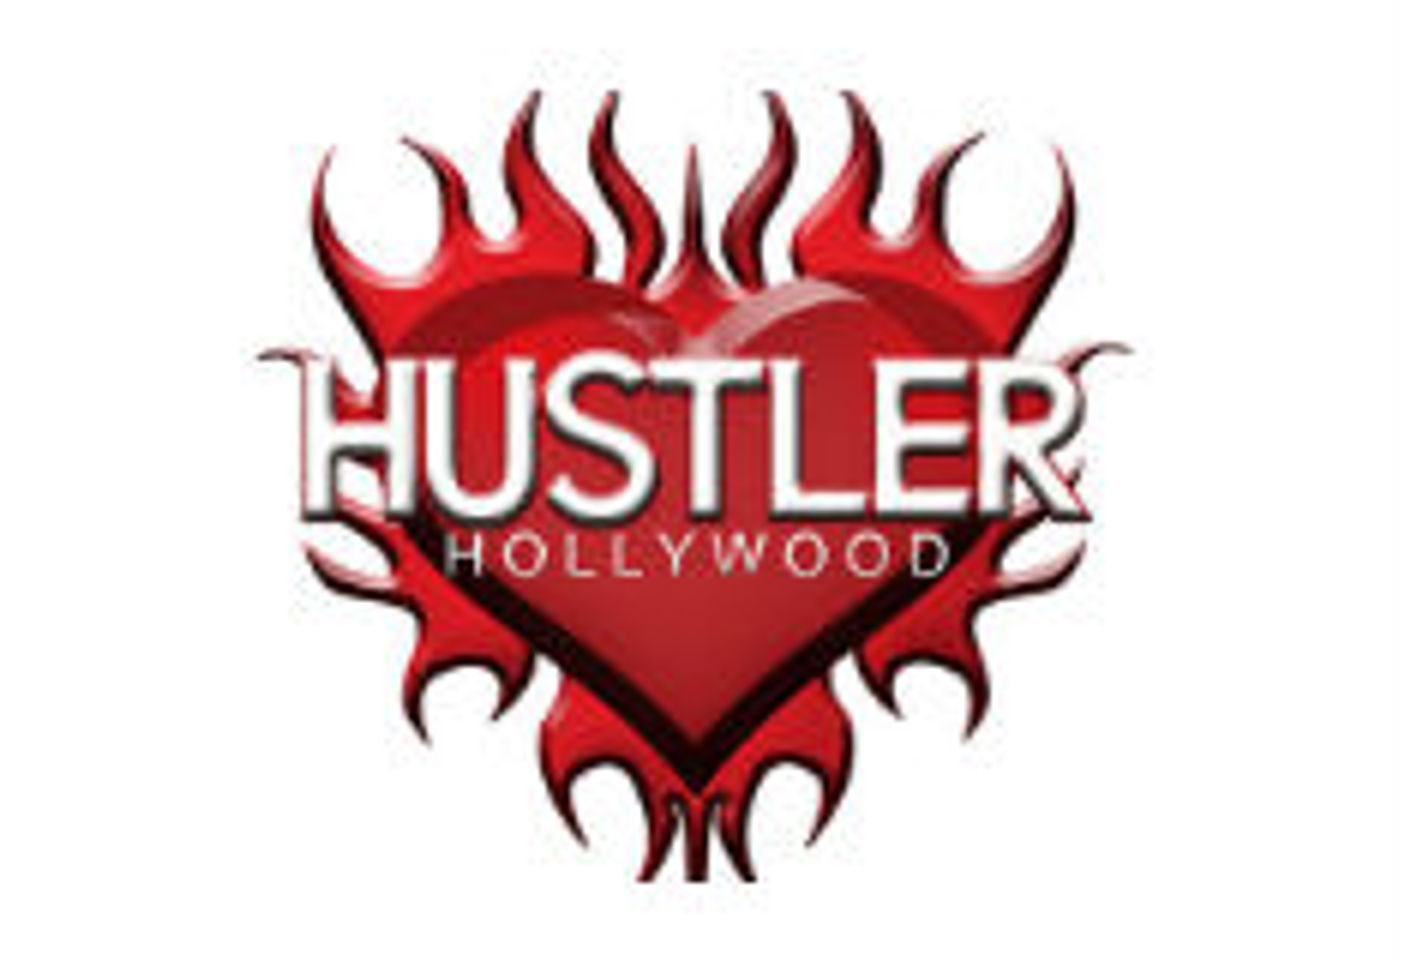 Hustler Hollywood, EDM Maniac Team For Party To Celebrate EDM Festival